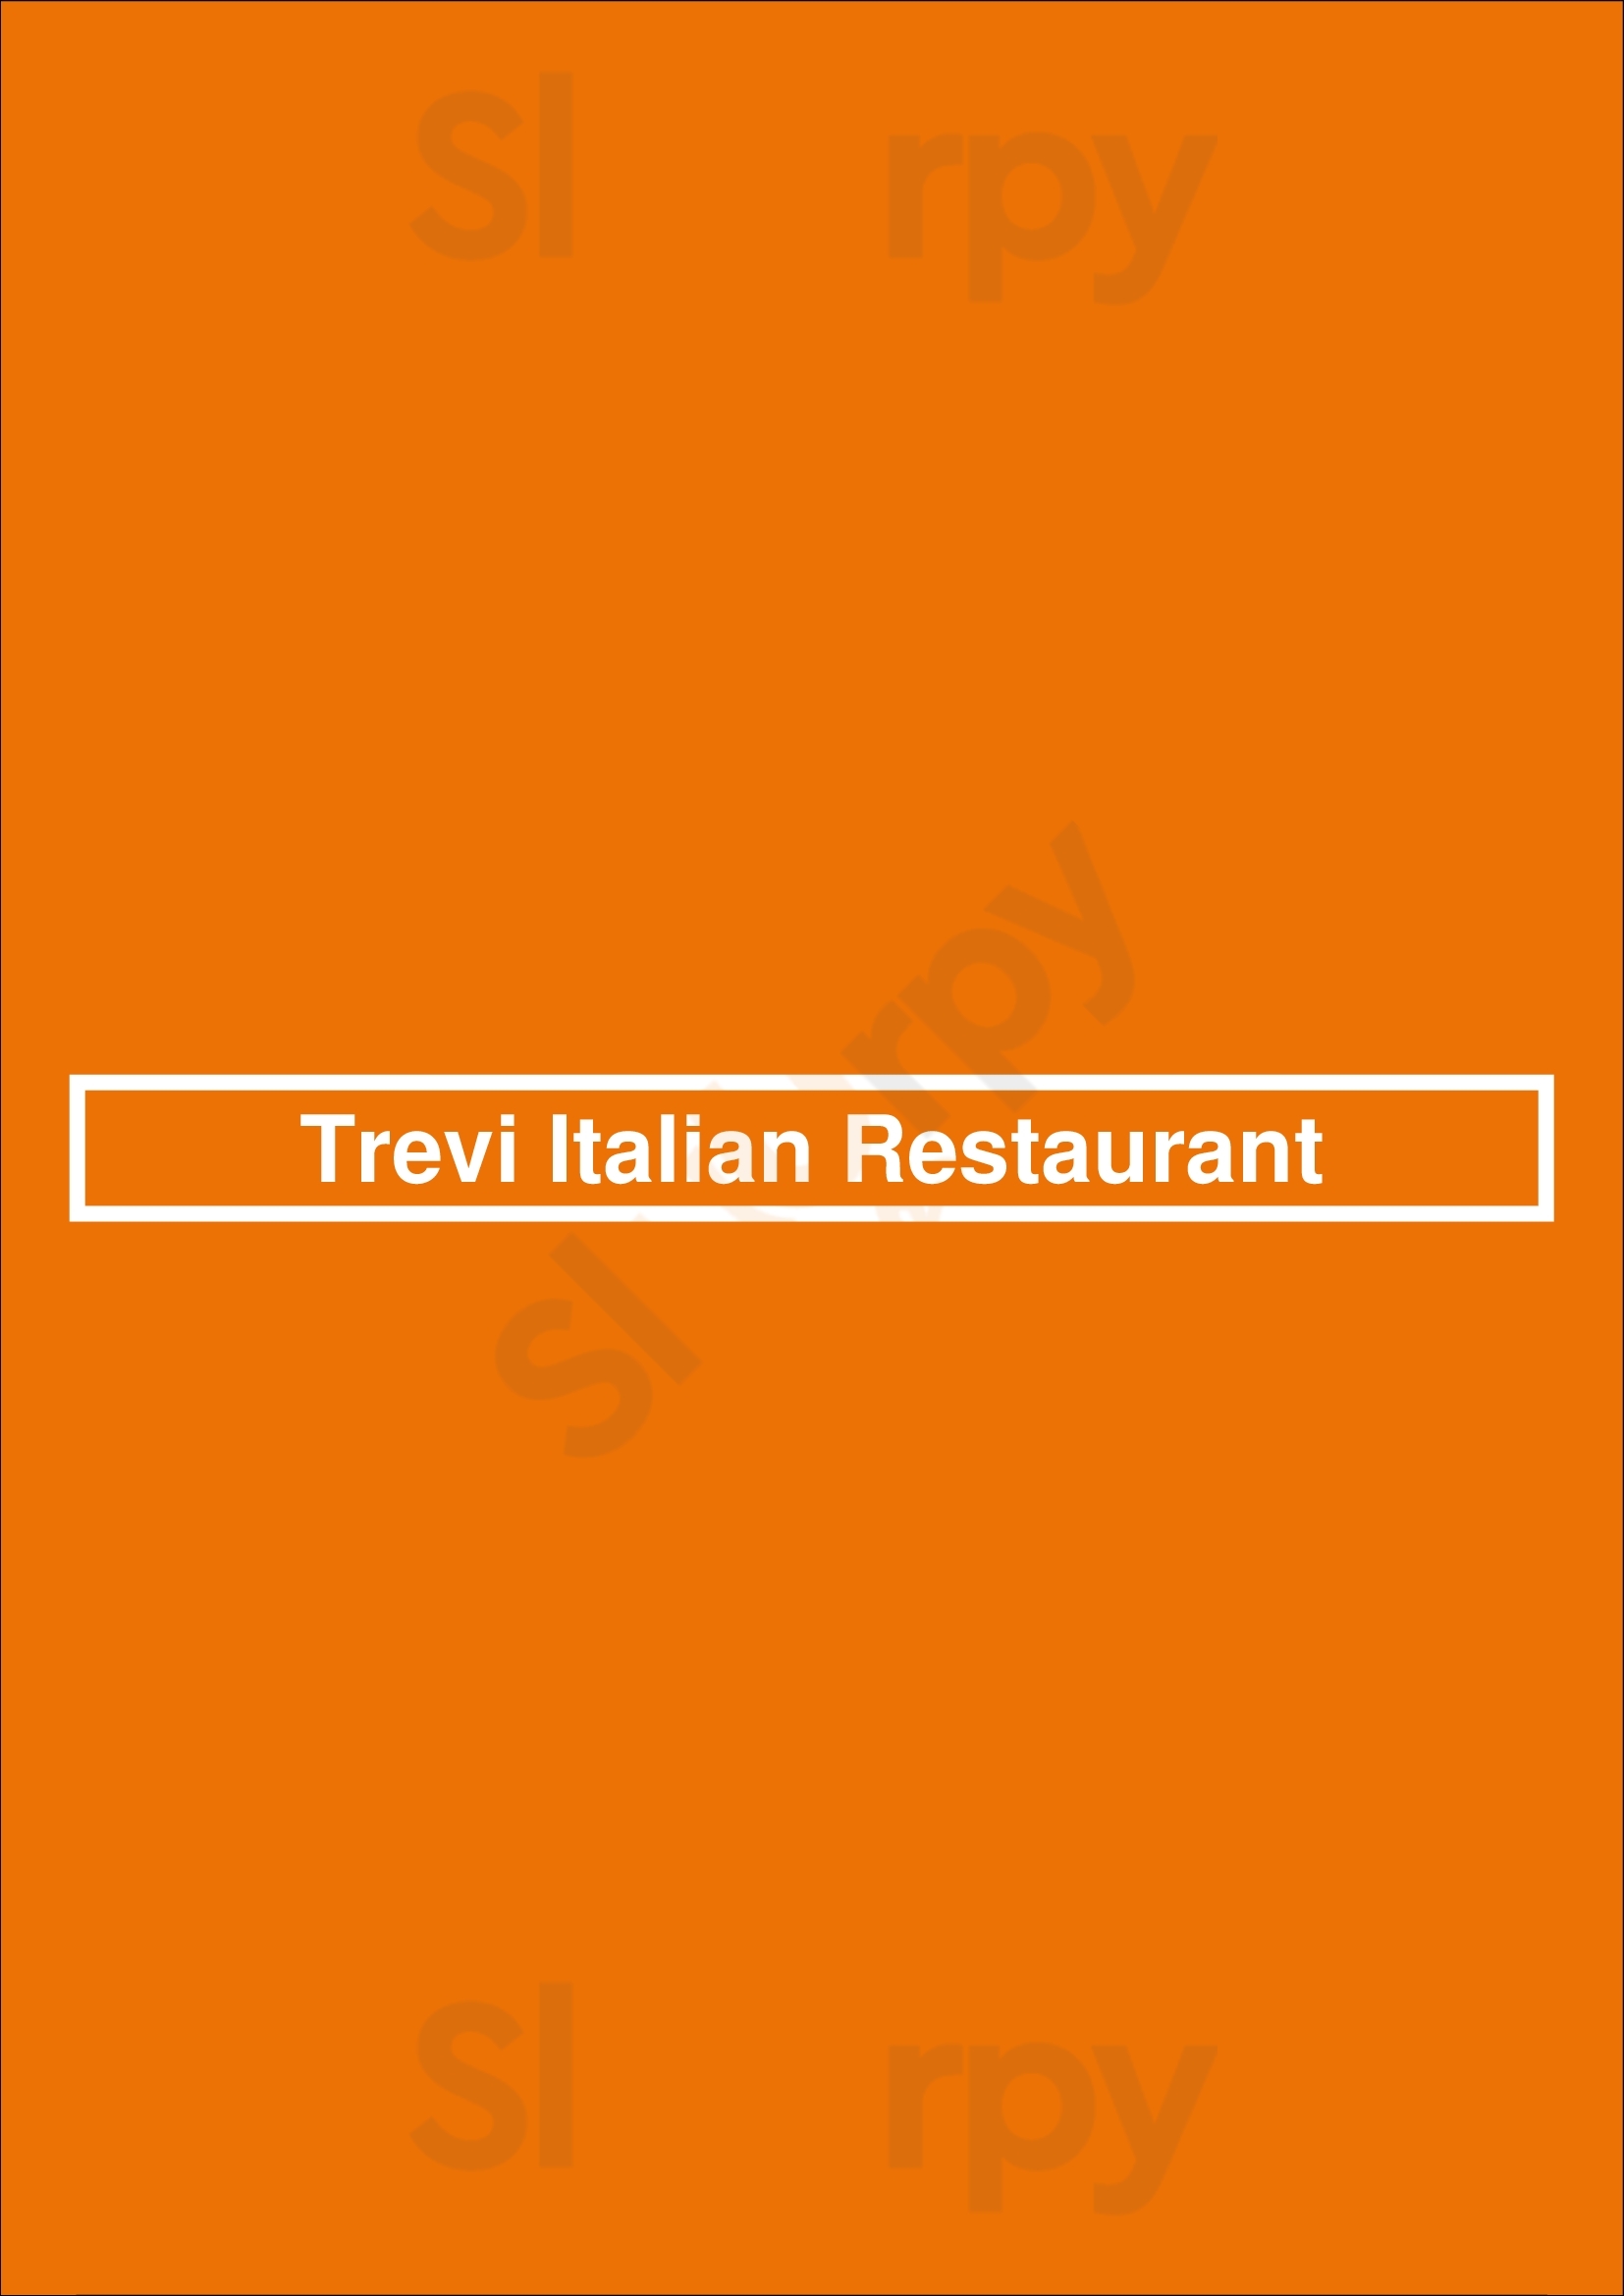 Trevi Italian Restaurant Las Vegas Menu - 1